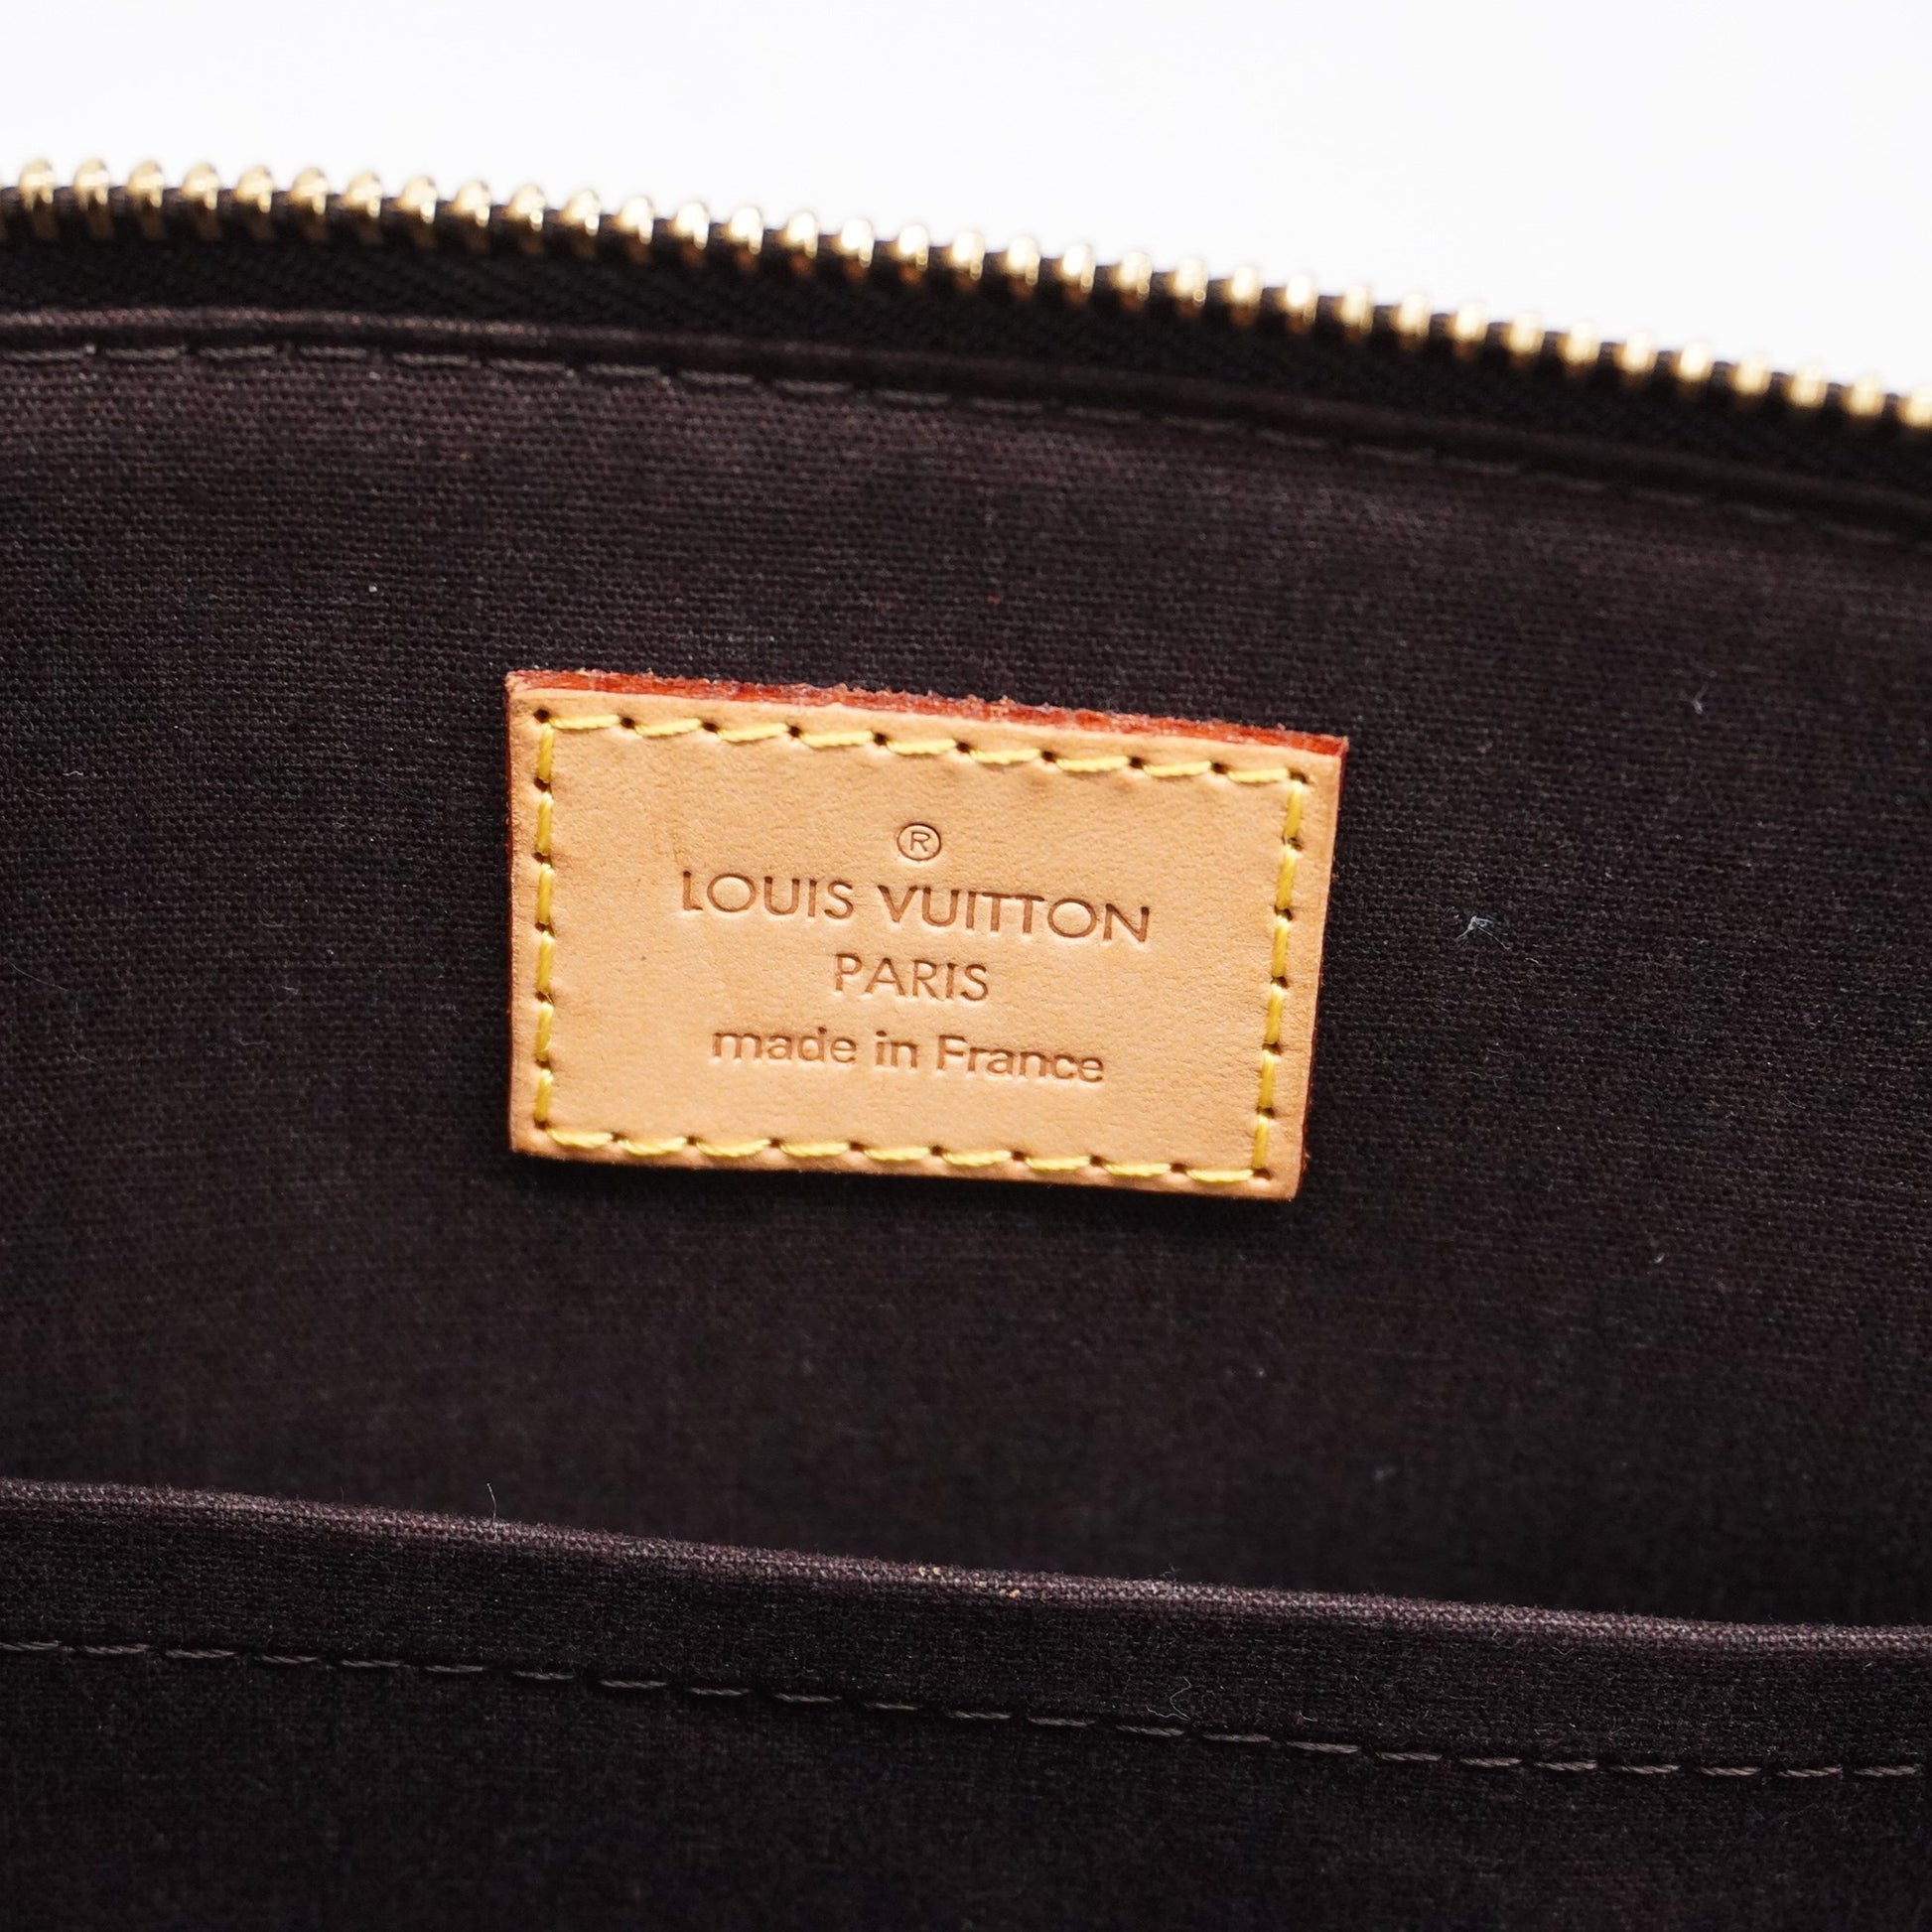 Auth Louis Vuitton Monogram Vernis Sherwood PM M91493 Women's Handbag  Amarante